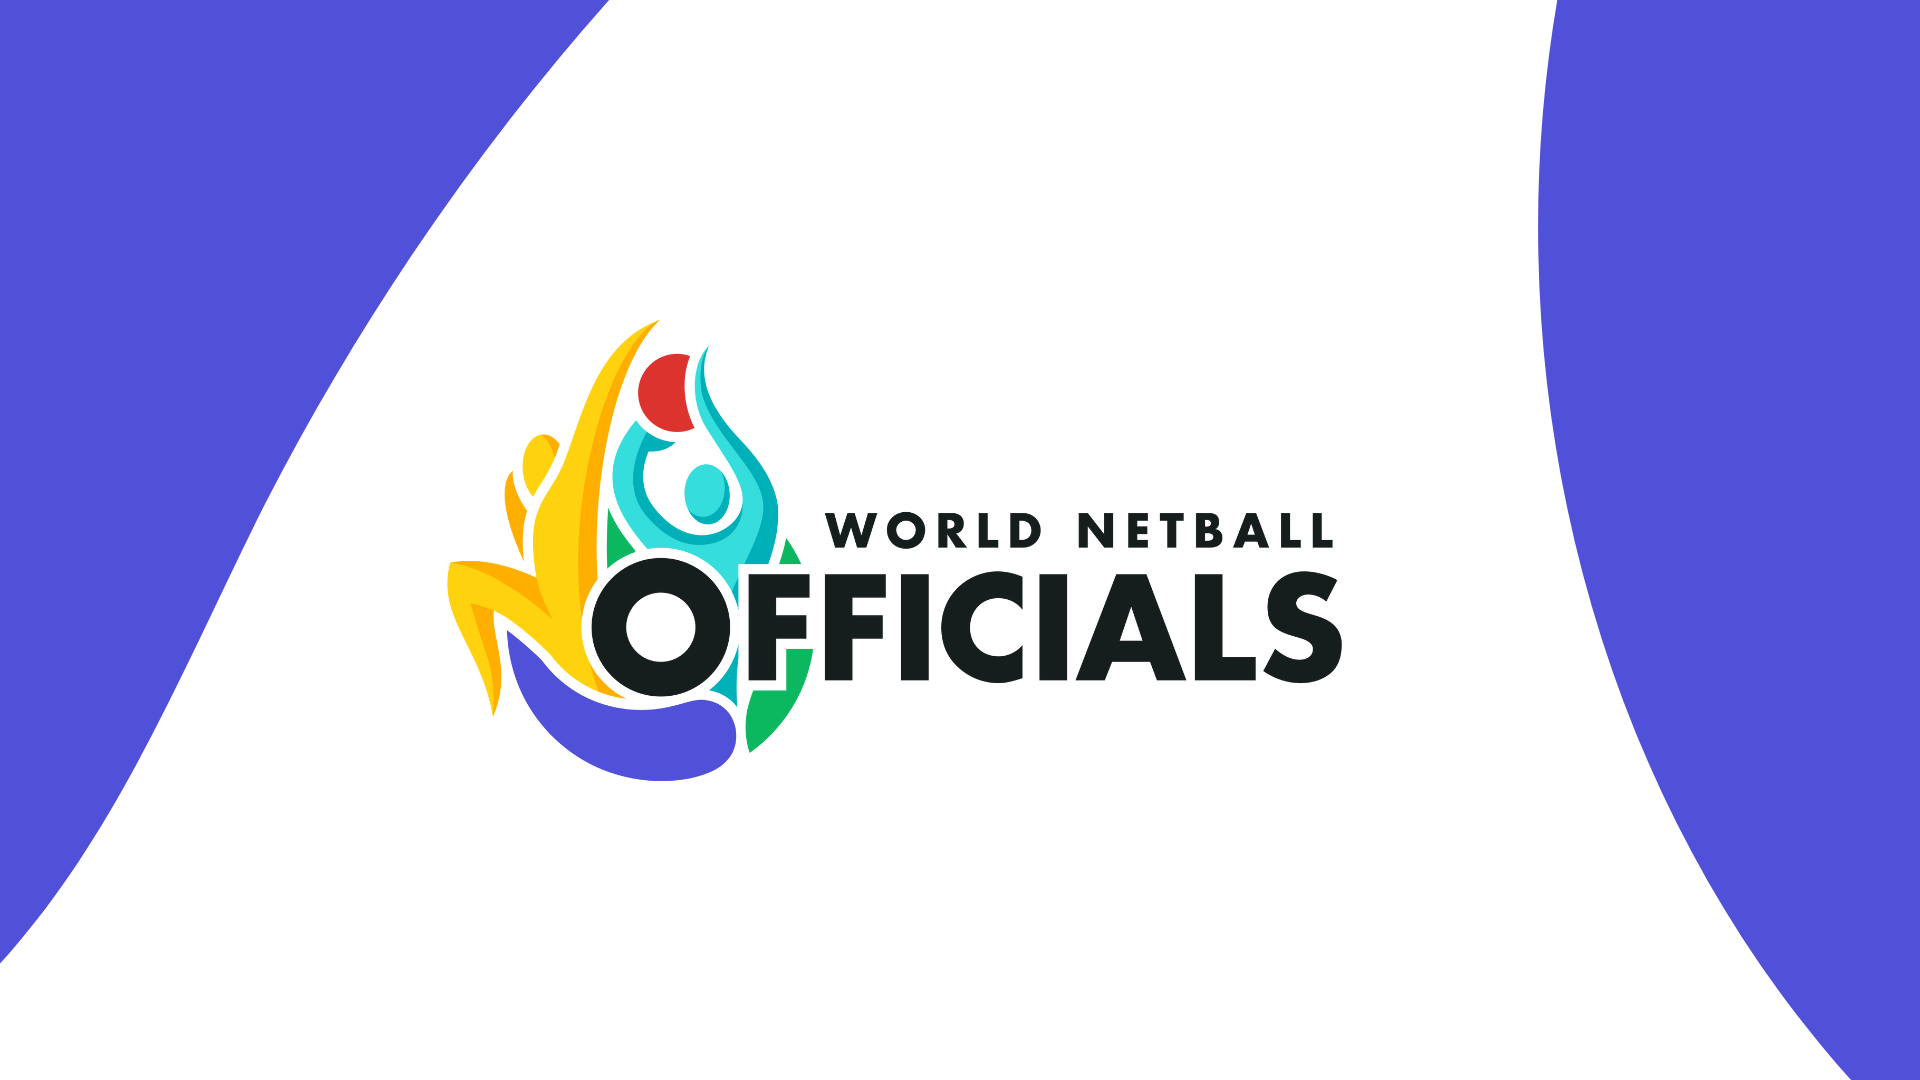 World Netball Announces Officials for the Europe Netball Open Challenge